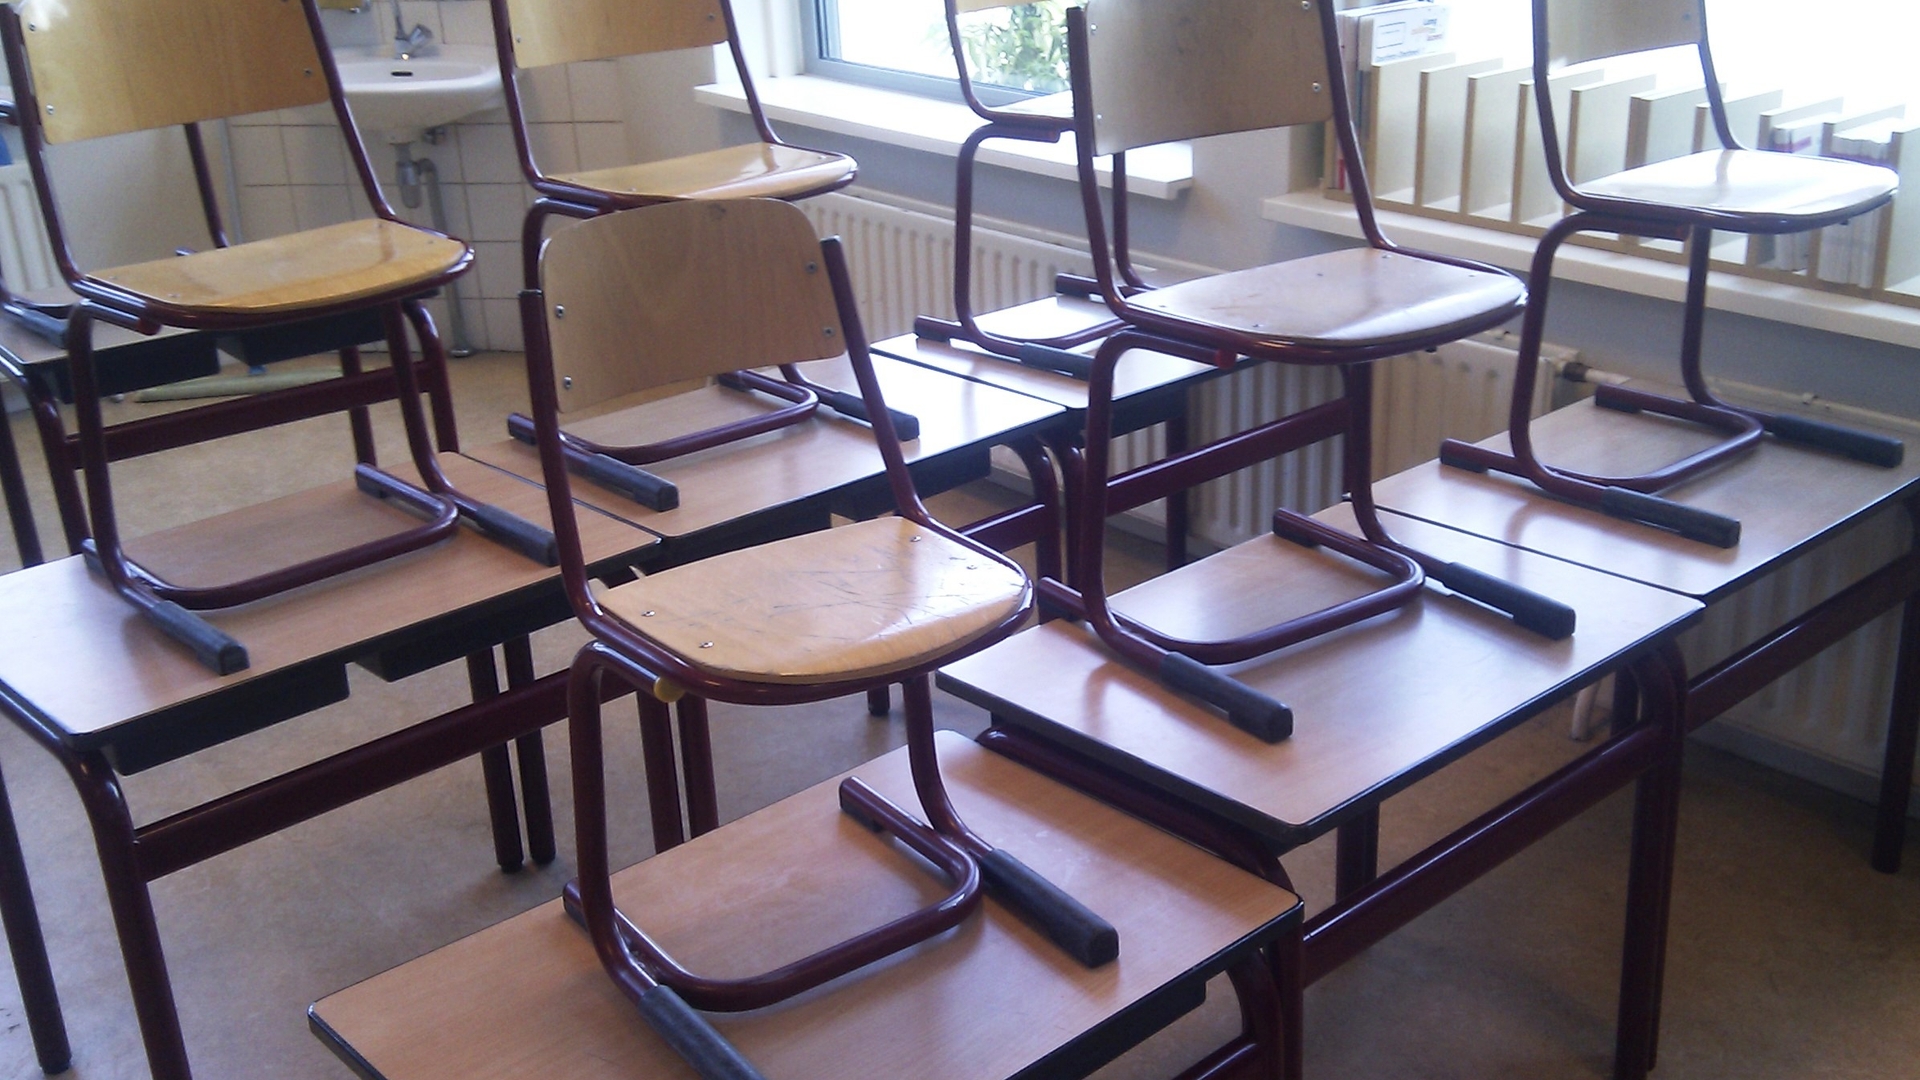 Empty_classroom